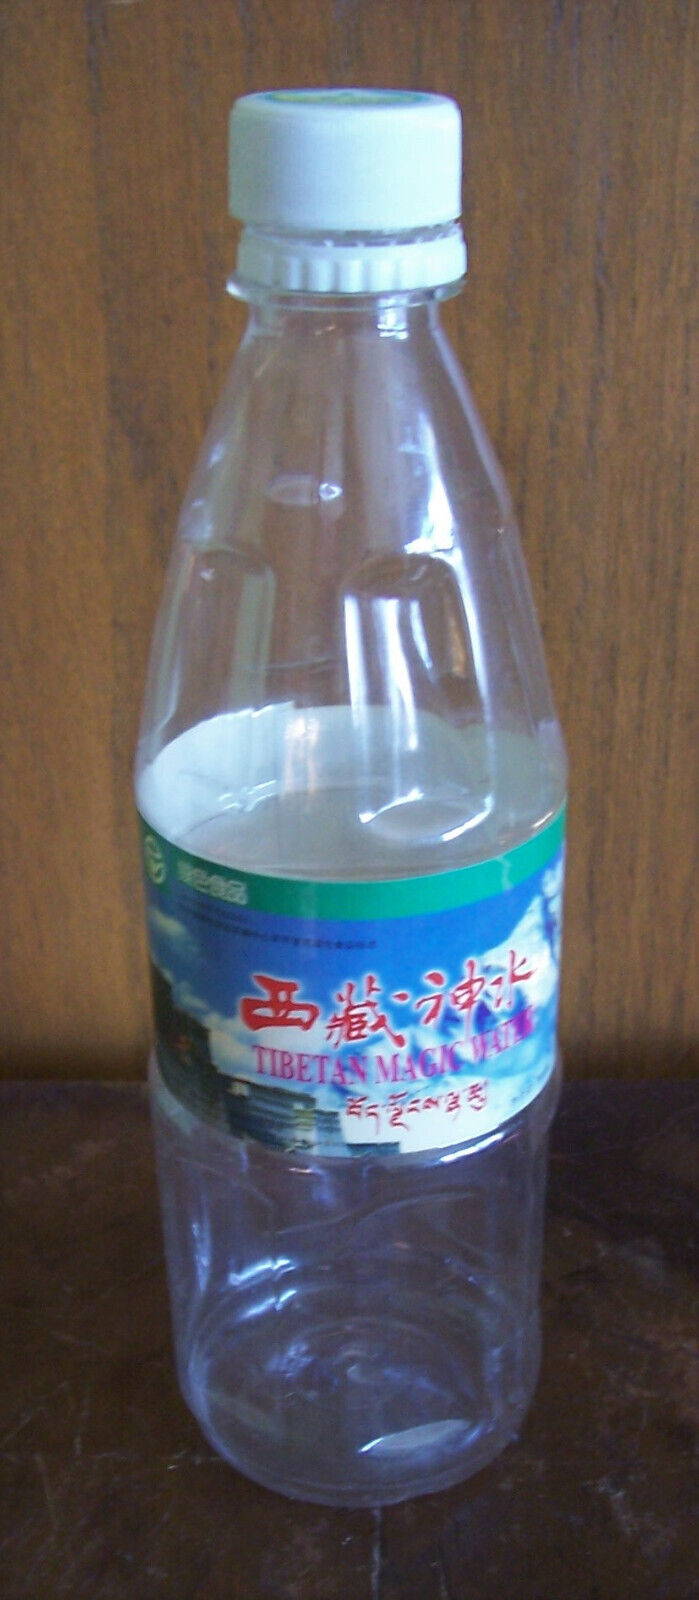 Tibetan Magic Water - Empty Bottle - Great Gag Gift